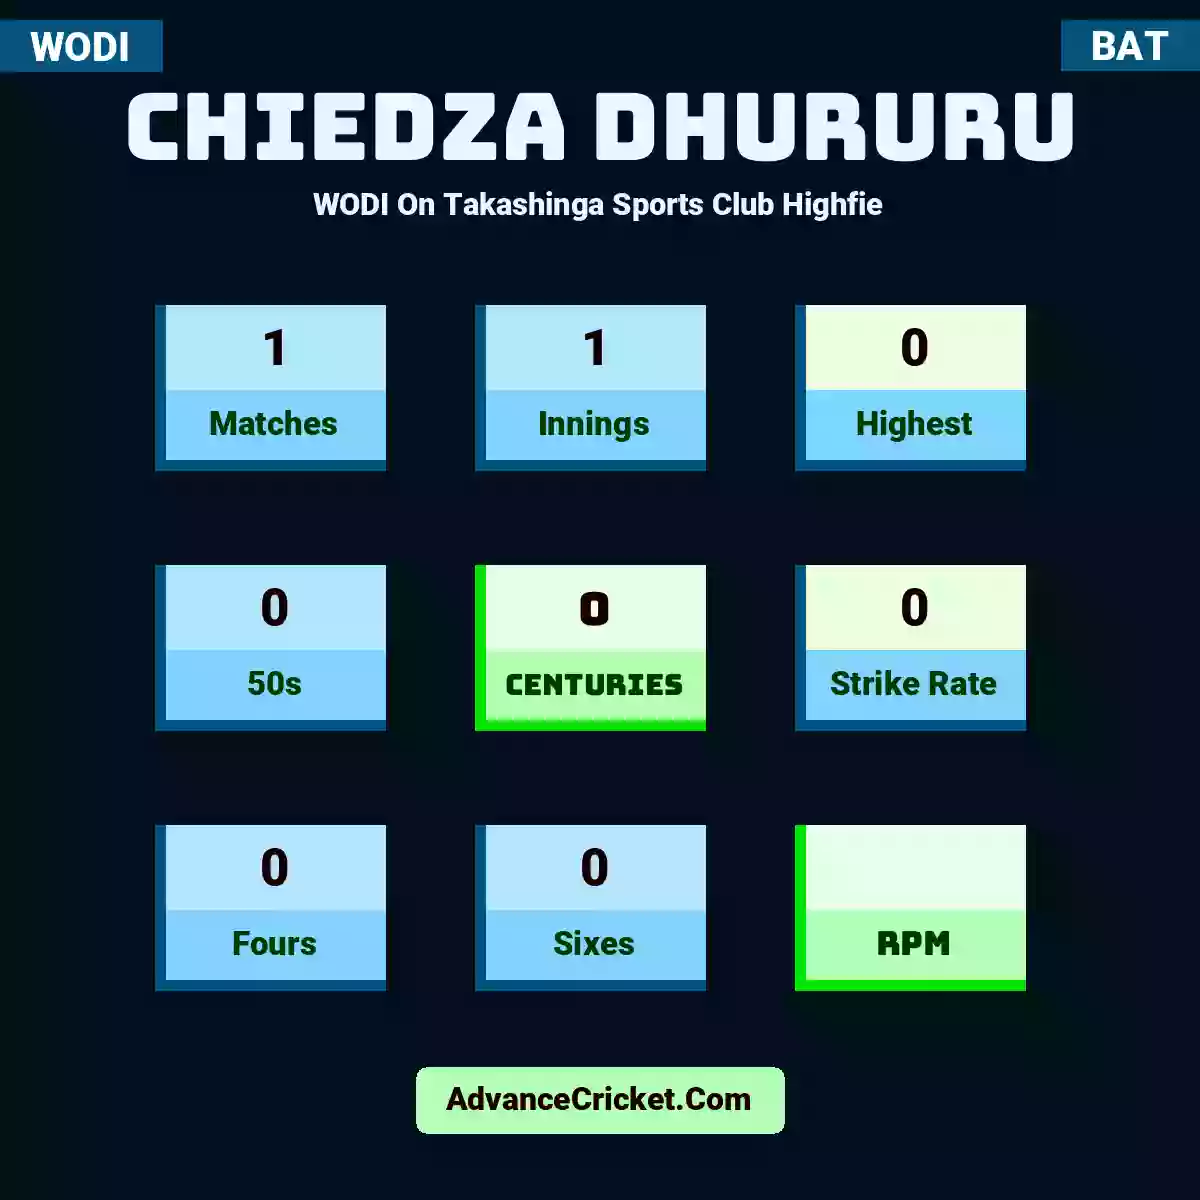 Chiedza Dhururu WODI  On Takashinga Sports Club Highfie, Chiedza Dhururu played 1 matches, scored 0 runs as highest, 0 half-centuries, and 0 centuries, with a strike rate of 0. C.Dhururu hit 0 fours and 0 sixes.